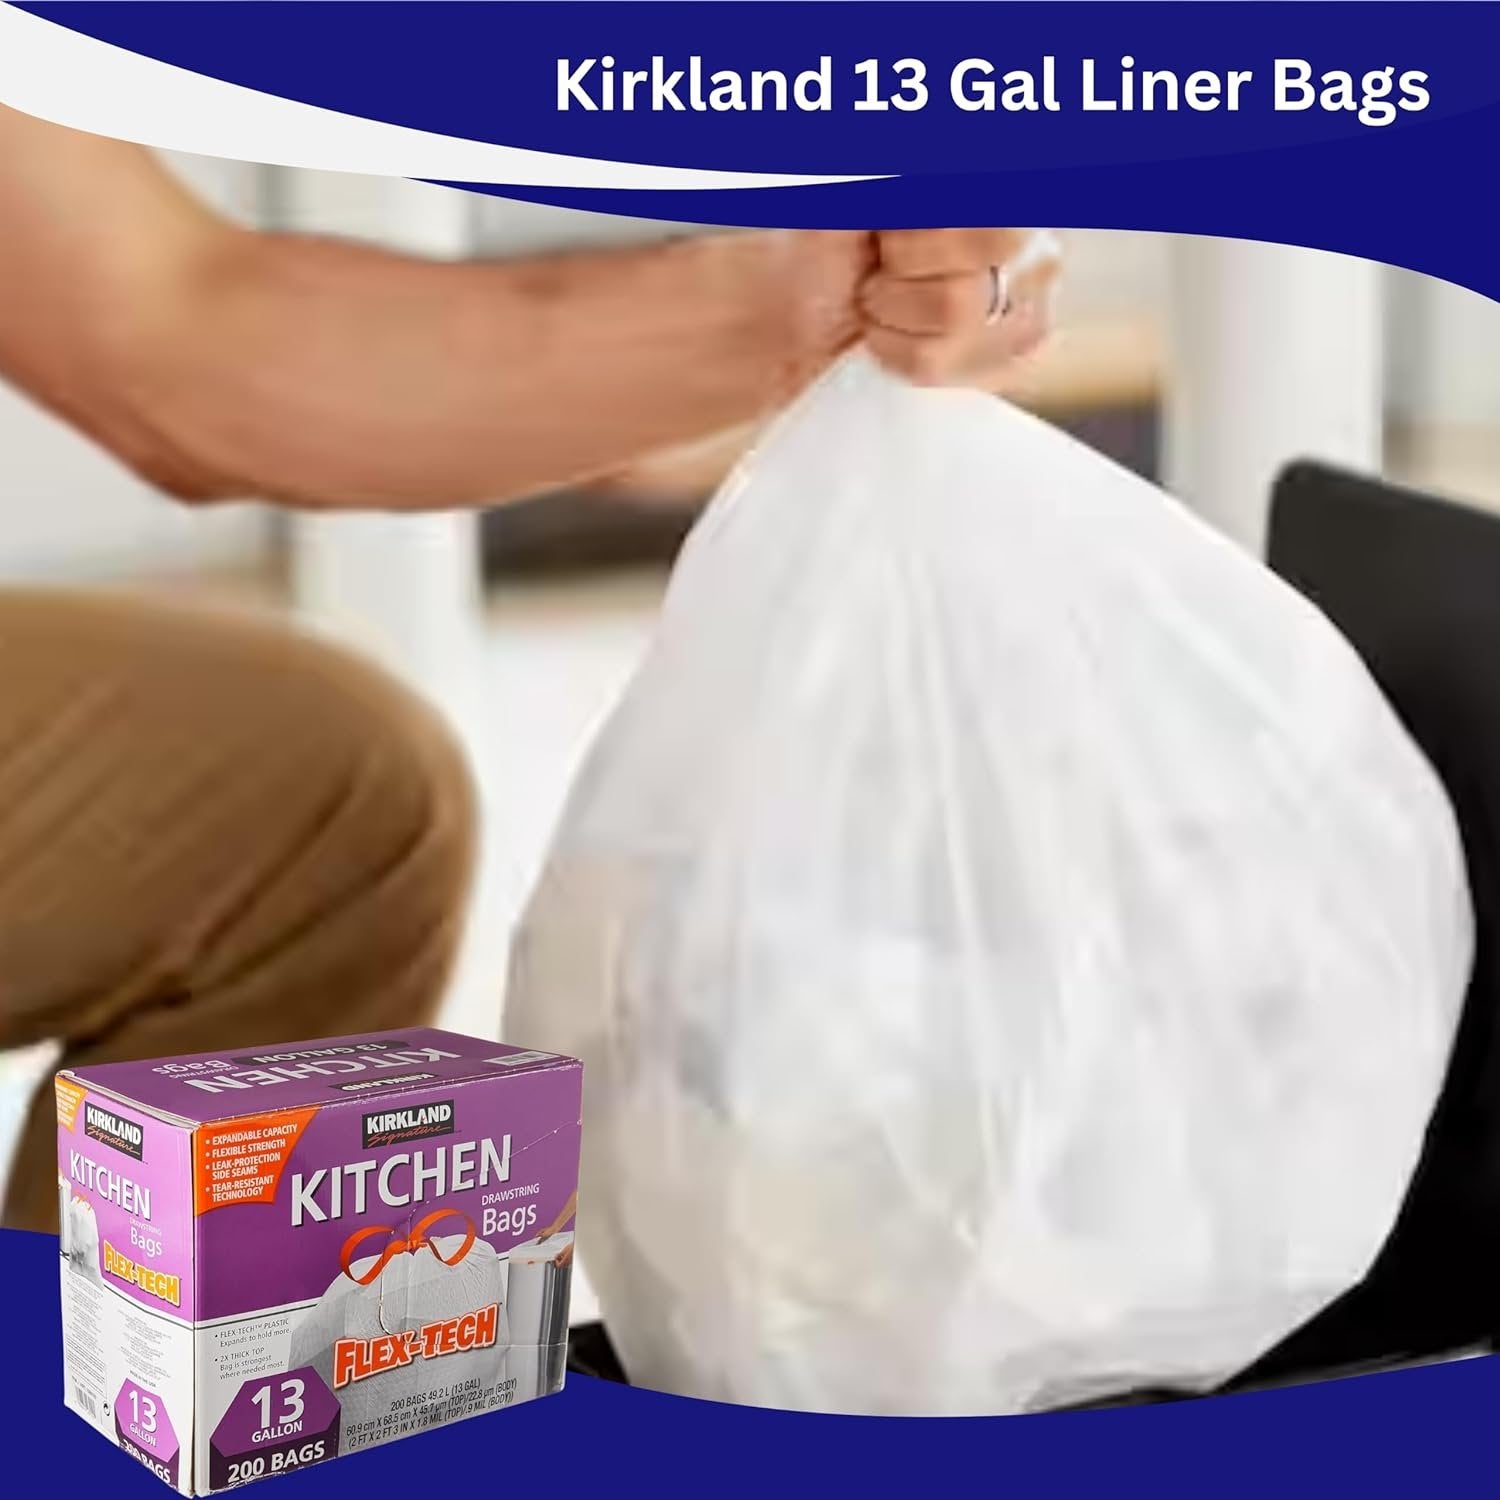 Kirkland Signature 13 Gallon Kitchen Drawstring Garbage Bag - Flex-Tech - 200 bags -  with Keychain